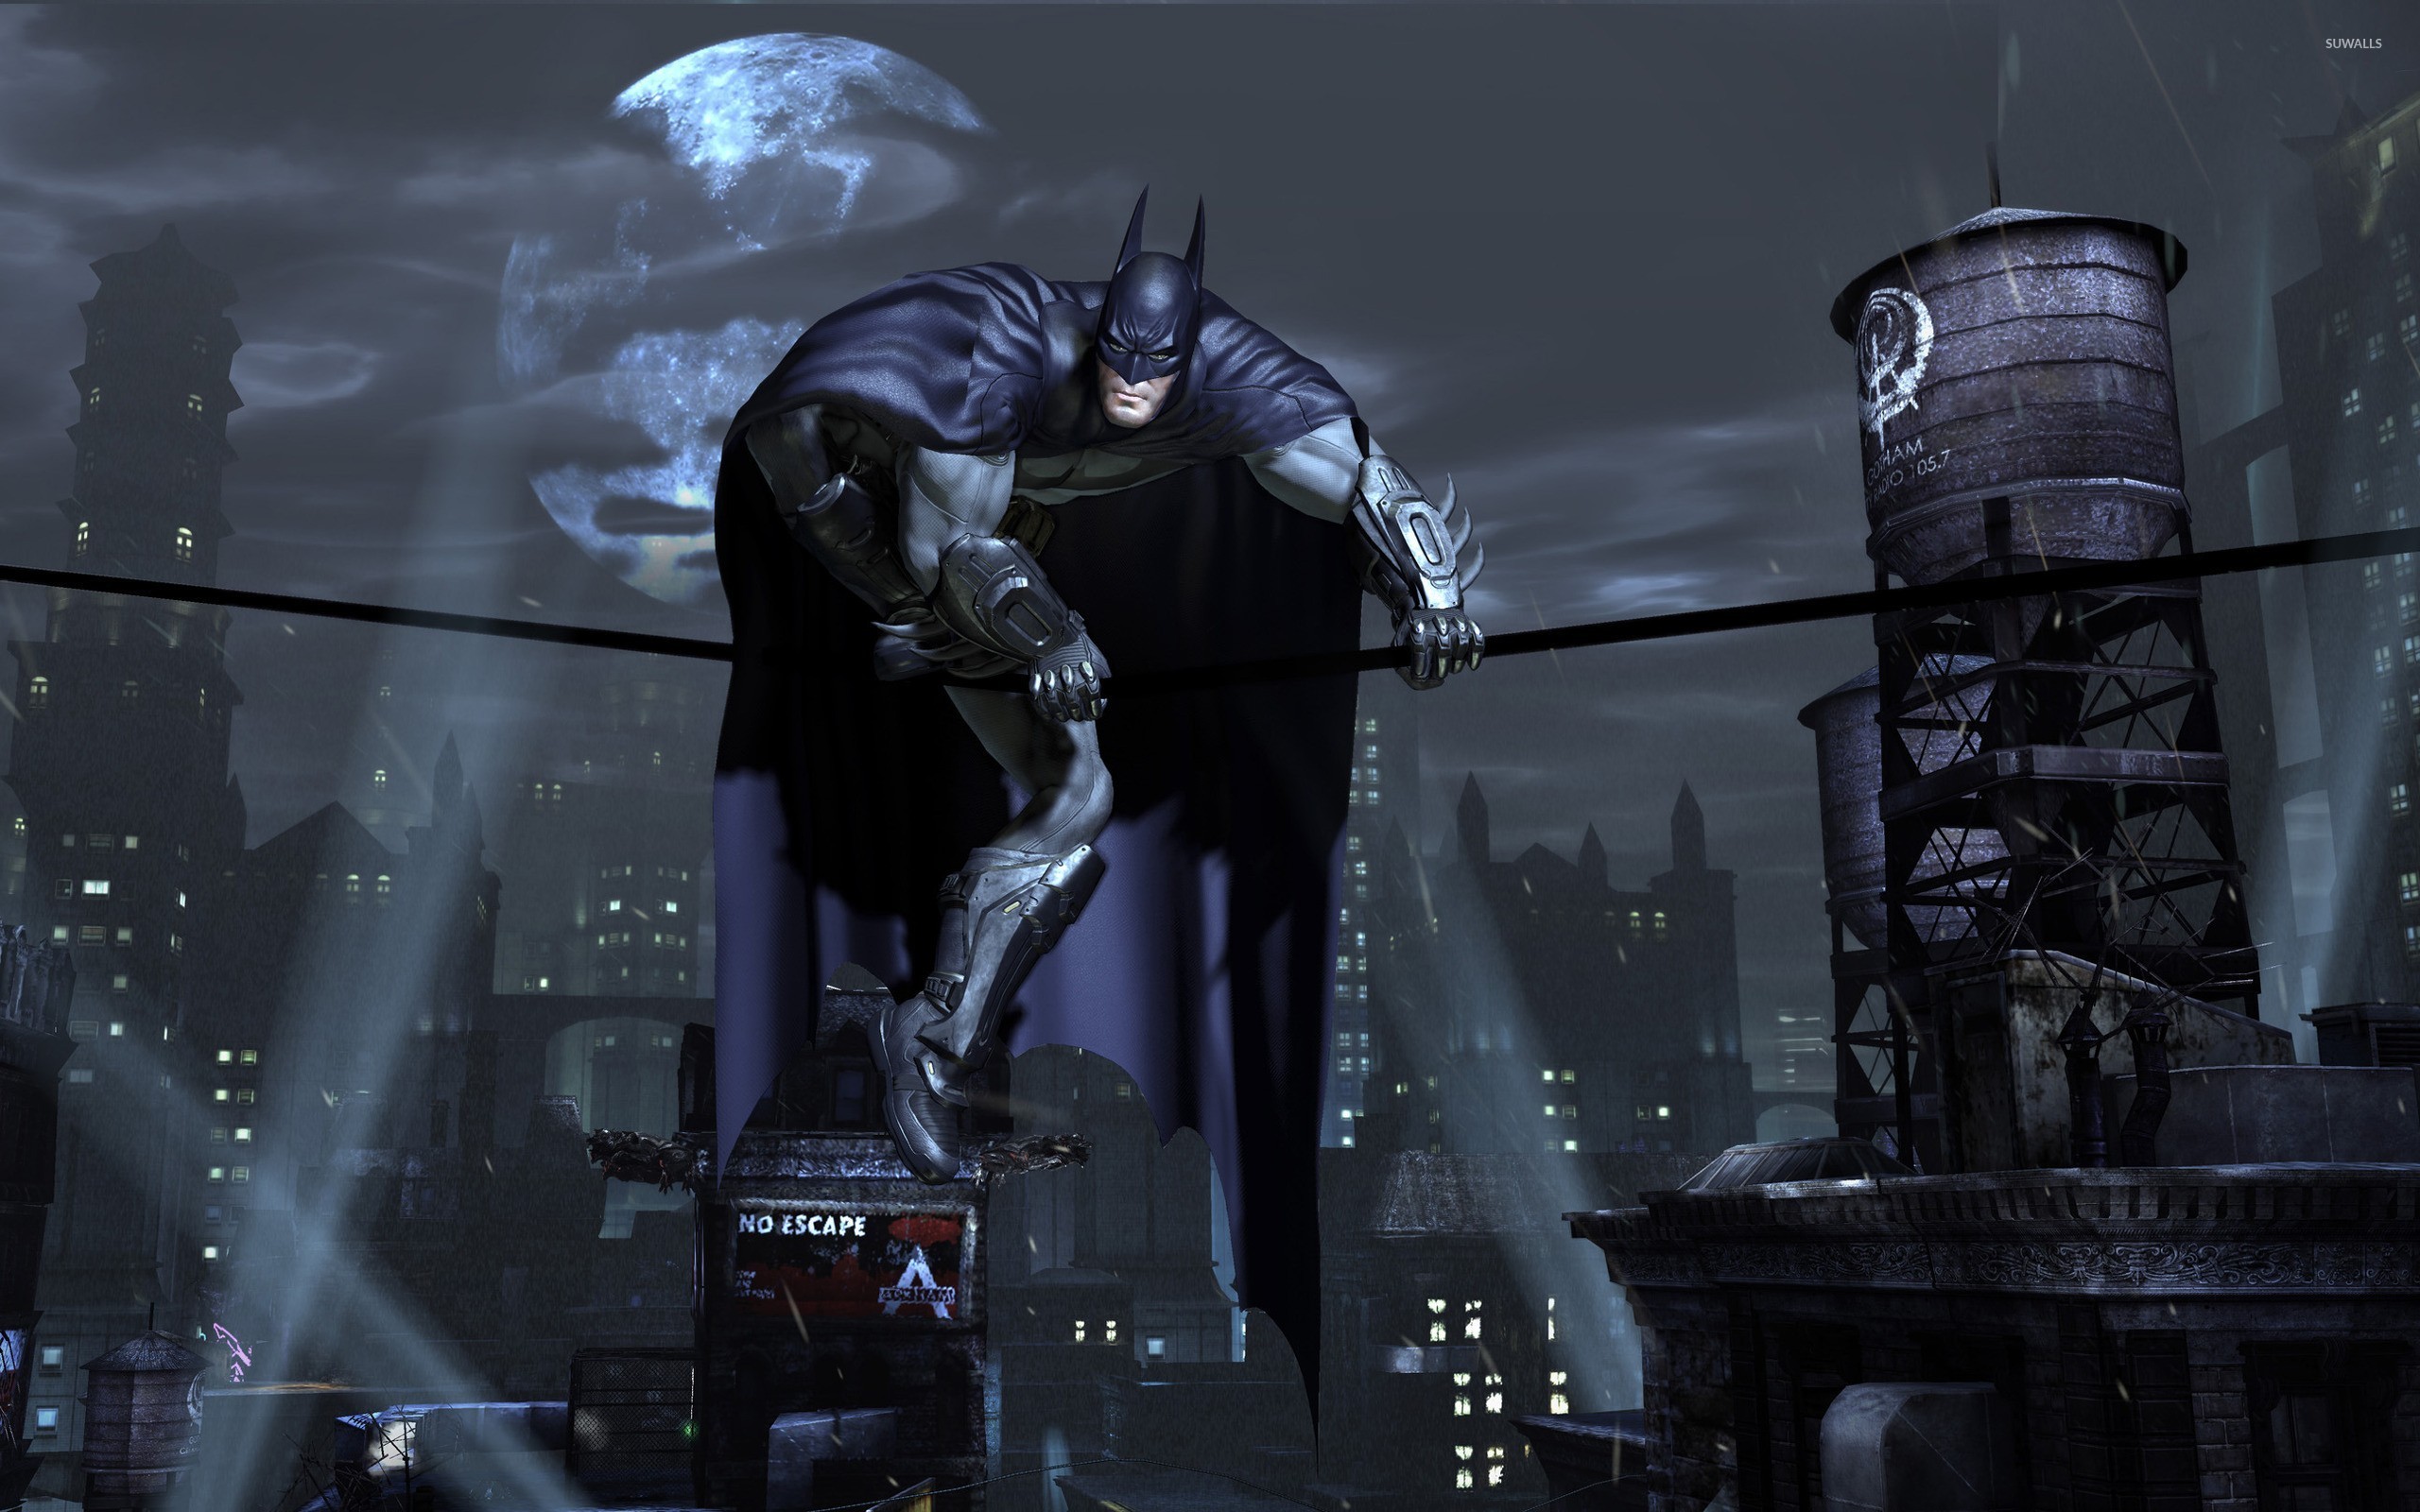 Batman: Arkham City wallpapers for desktop, download free Batman: Arkham  City pictures and backgrounds for PC